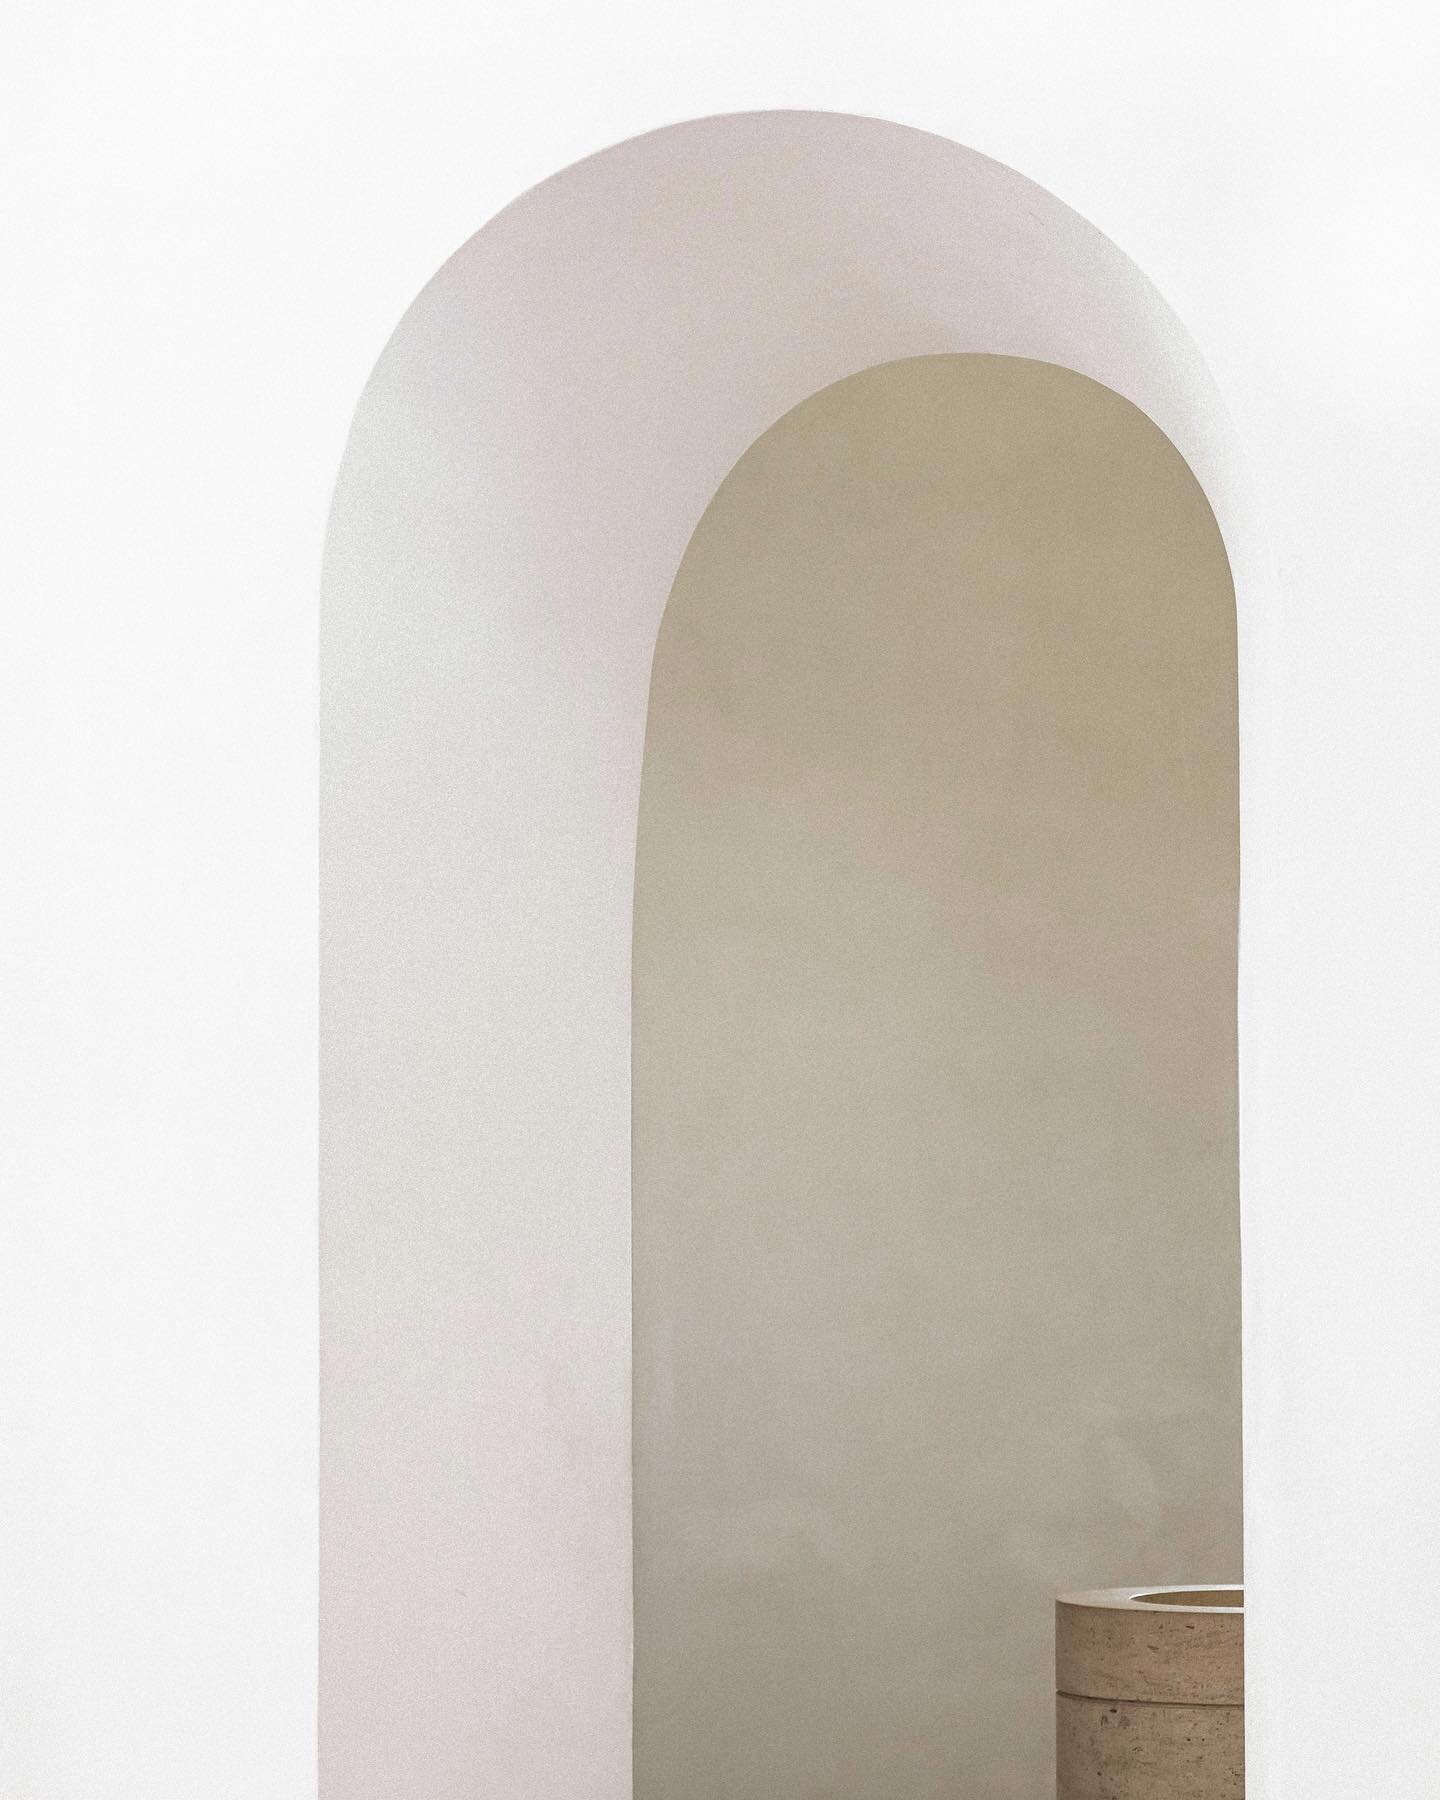 Archway 🤍

#minimalism #beautifulhomes #architecturedesign #interiordesigner #dreaminterior #staycationbali #vogueliving #dreamvacation #bali #photoshoot #balilife